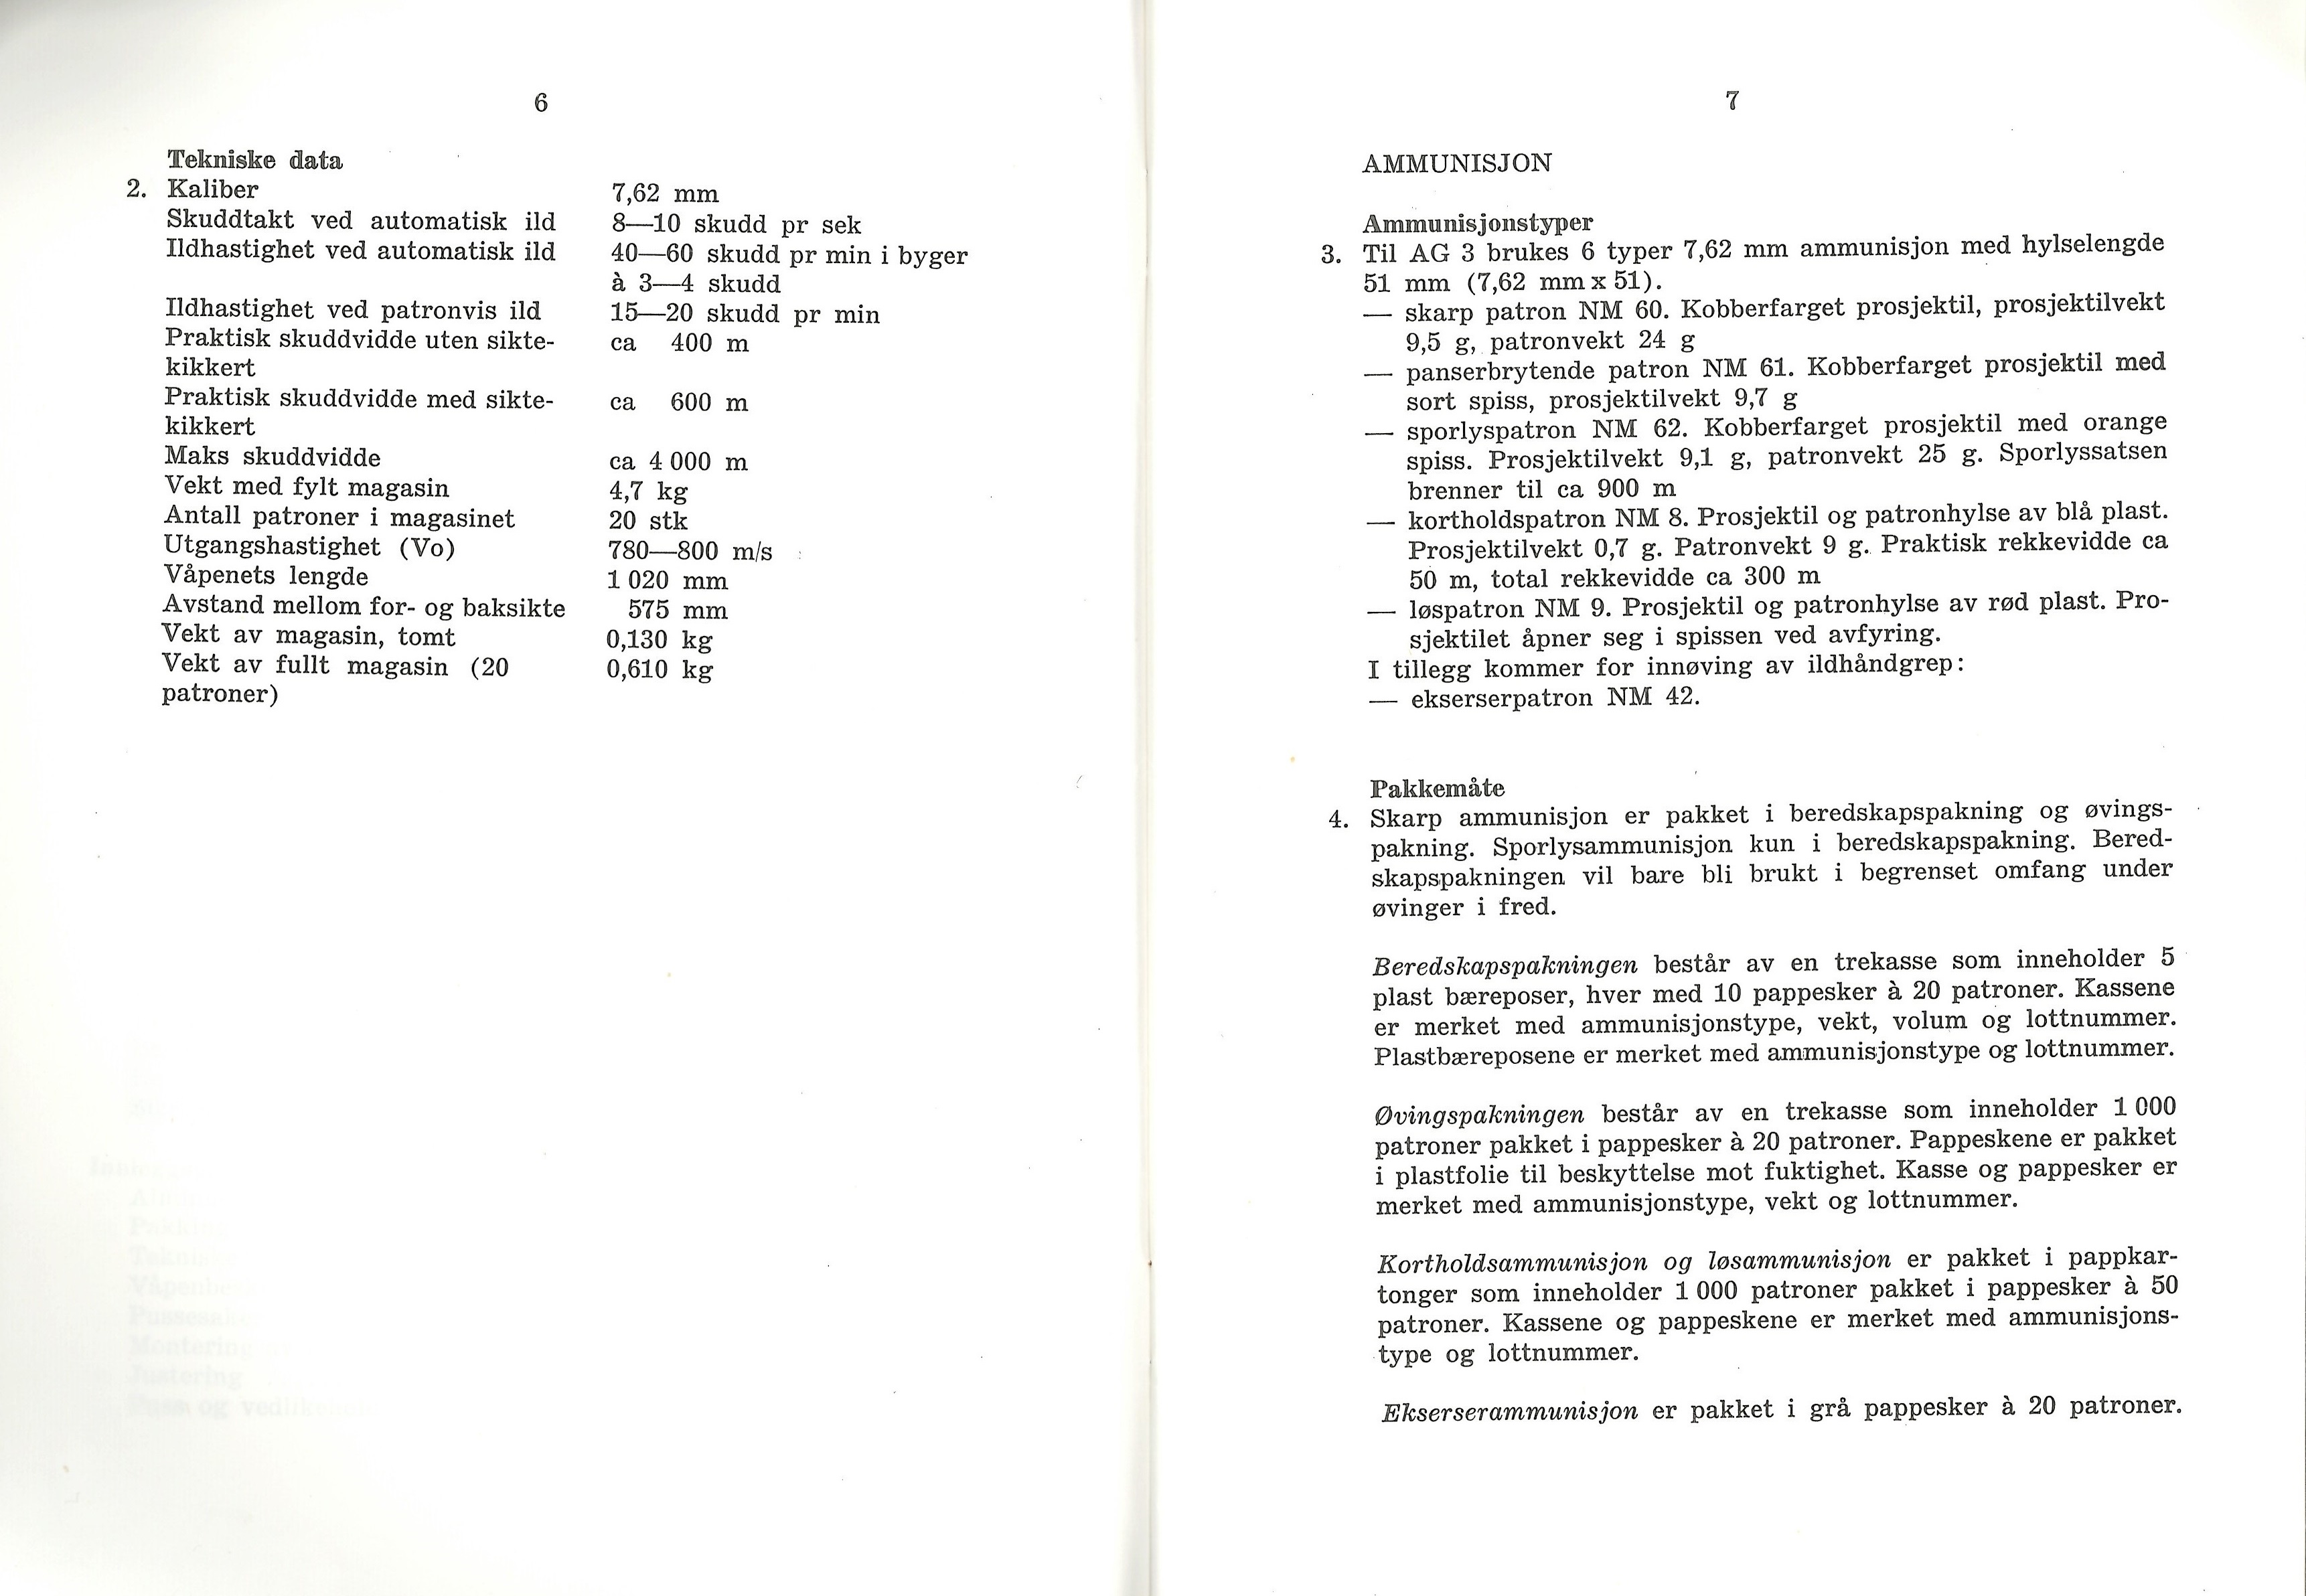 ./doc/reglement/AG3/AG3-UD-5-8-1981-5.jpeg